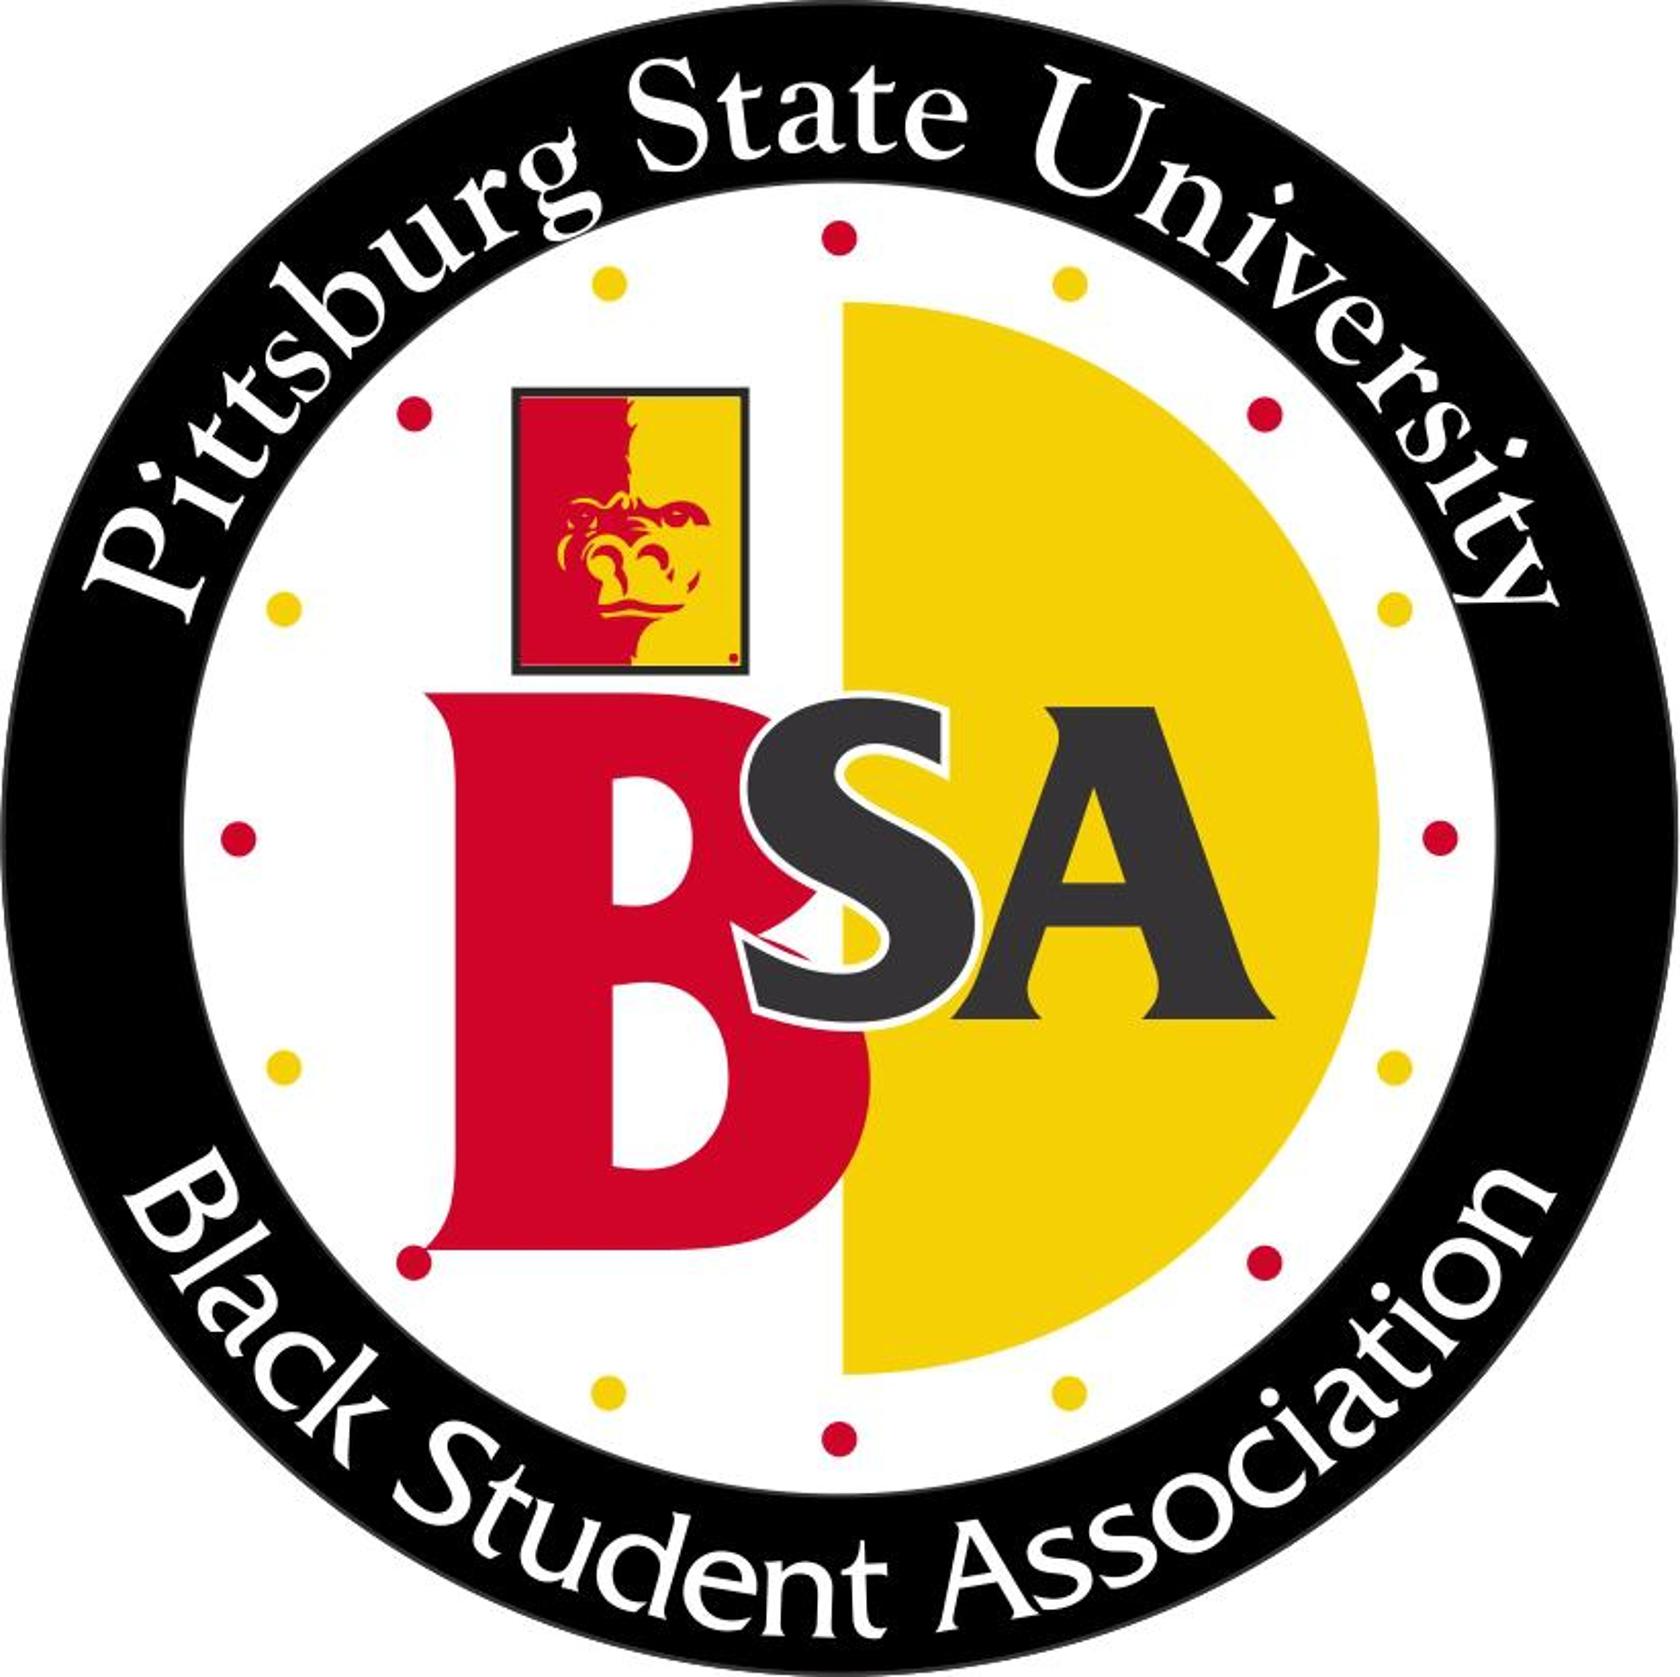 Black Student Association